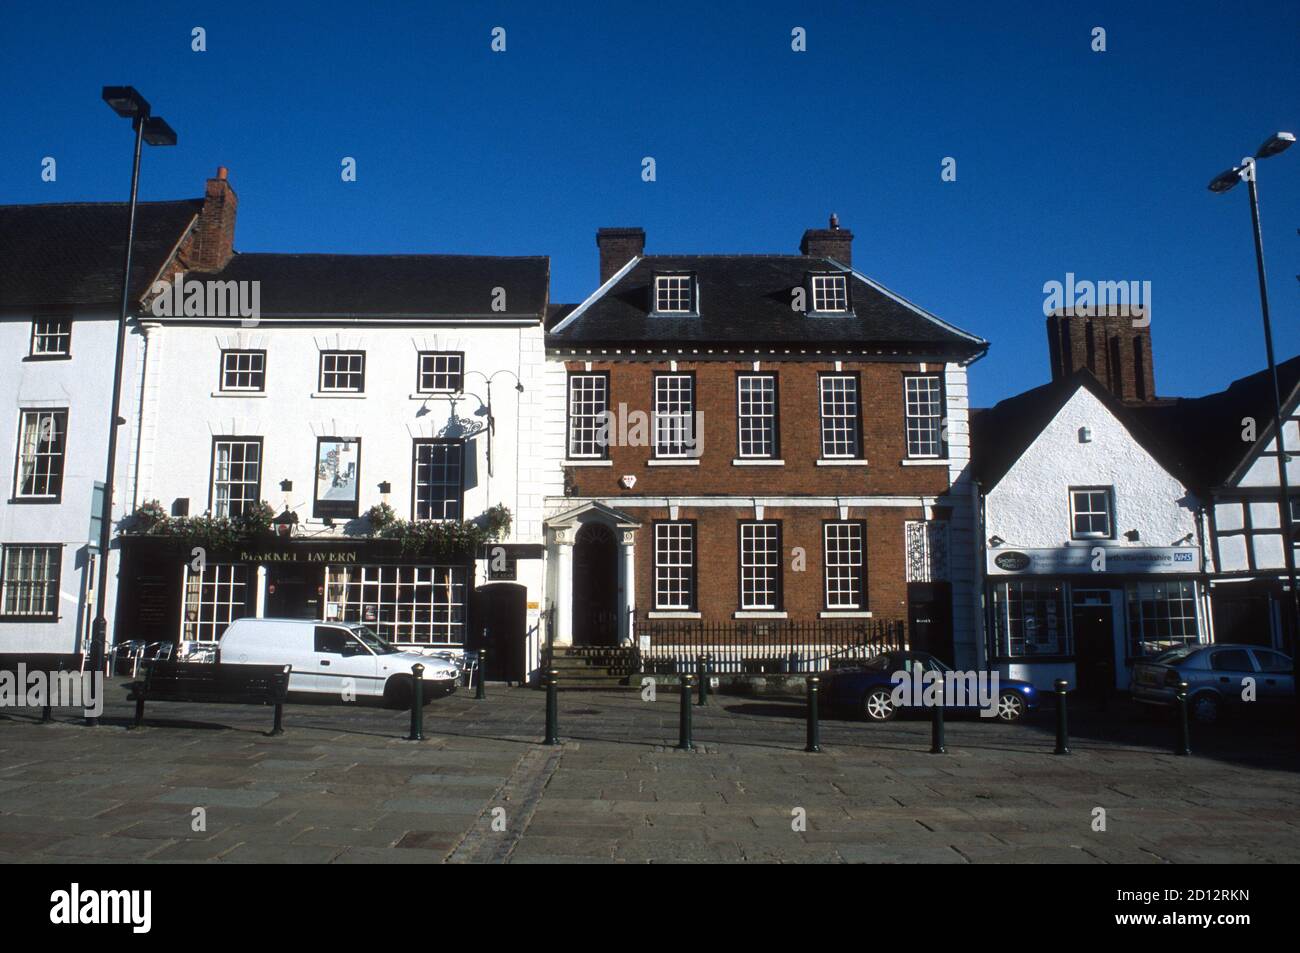 Market Square, Market Tavern and Beech House, Atherstone, Warwickshire, England, UK Stock Photo